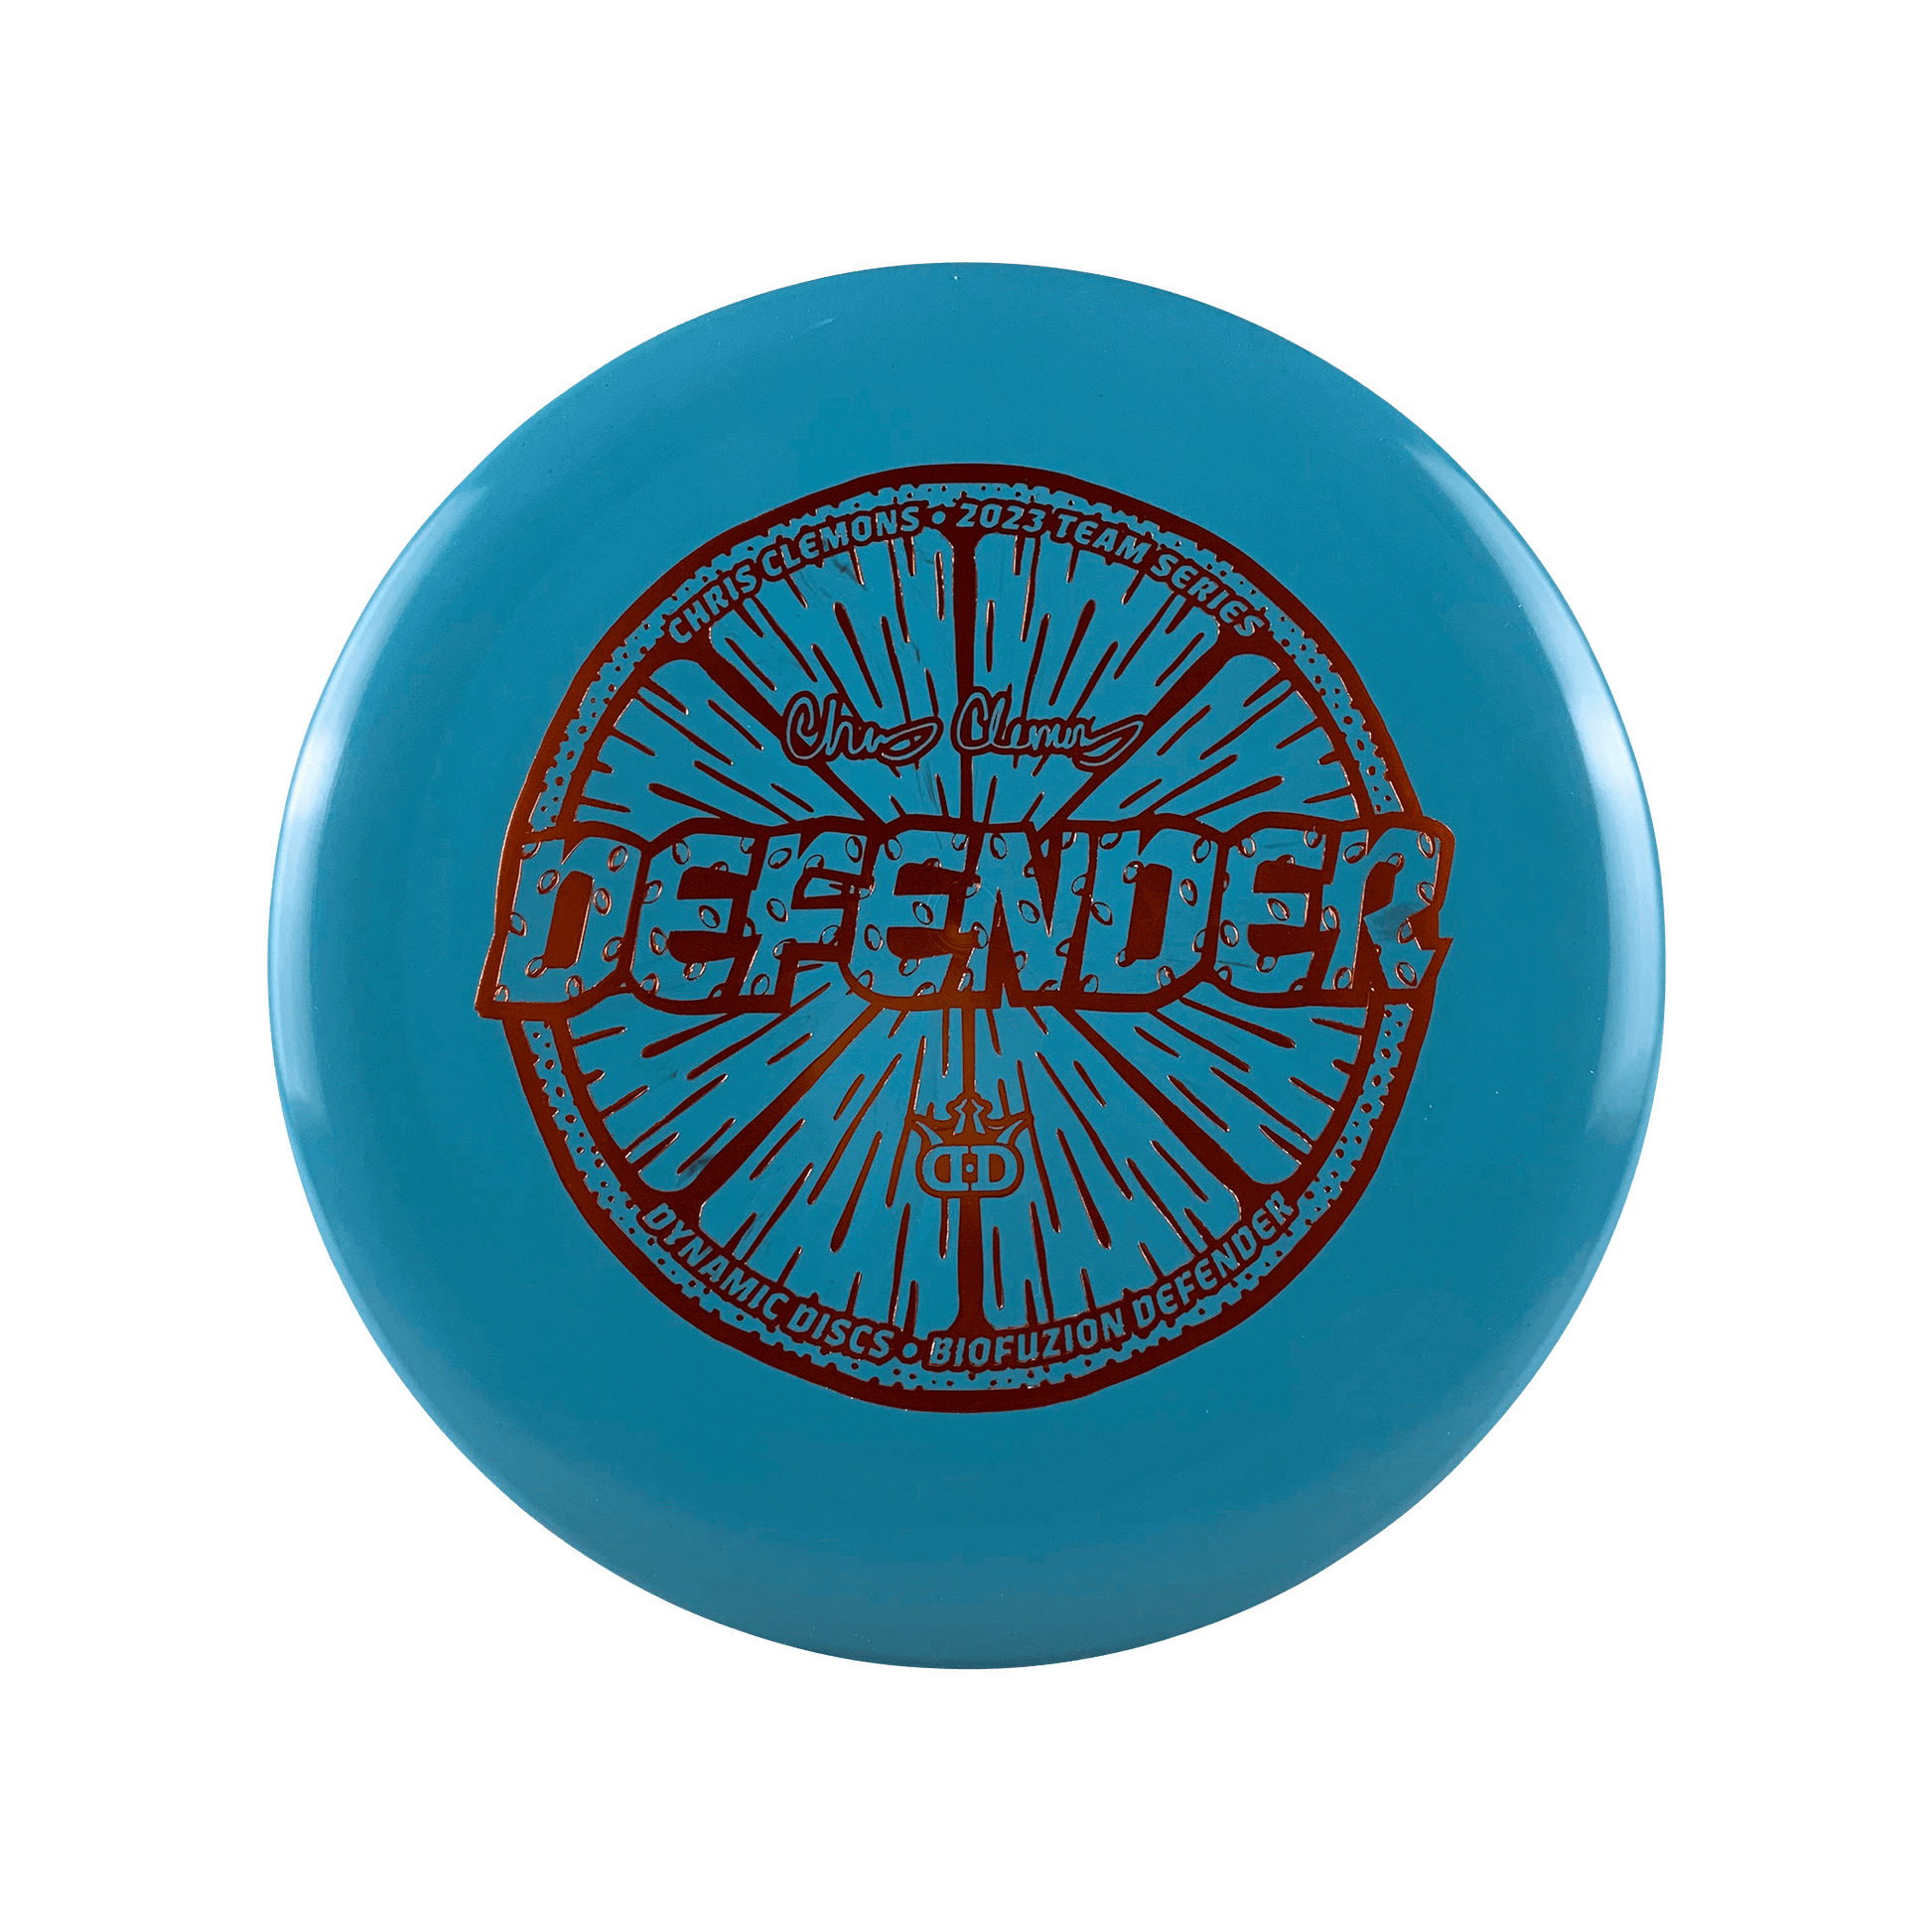 BioFuzion Defender - Chris Clemons Team Series Disc Dynamic Discs blue 171 